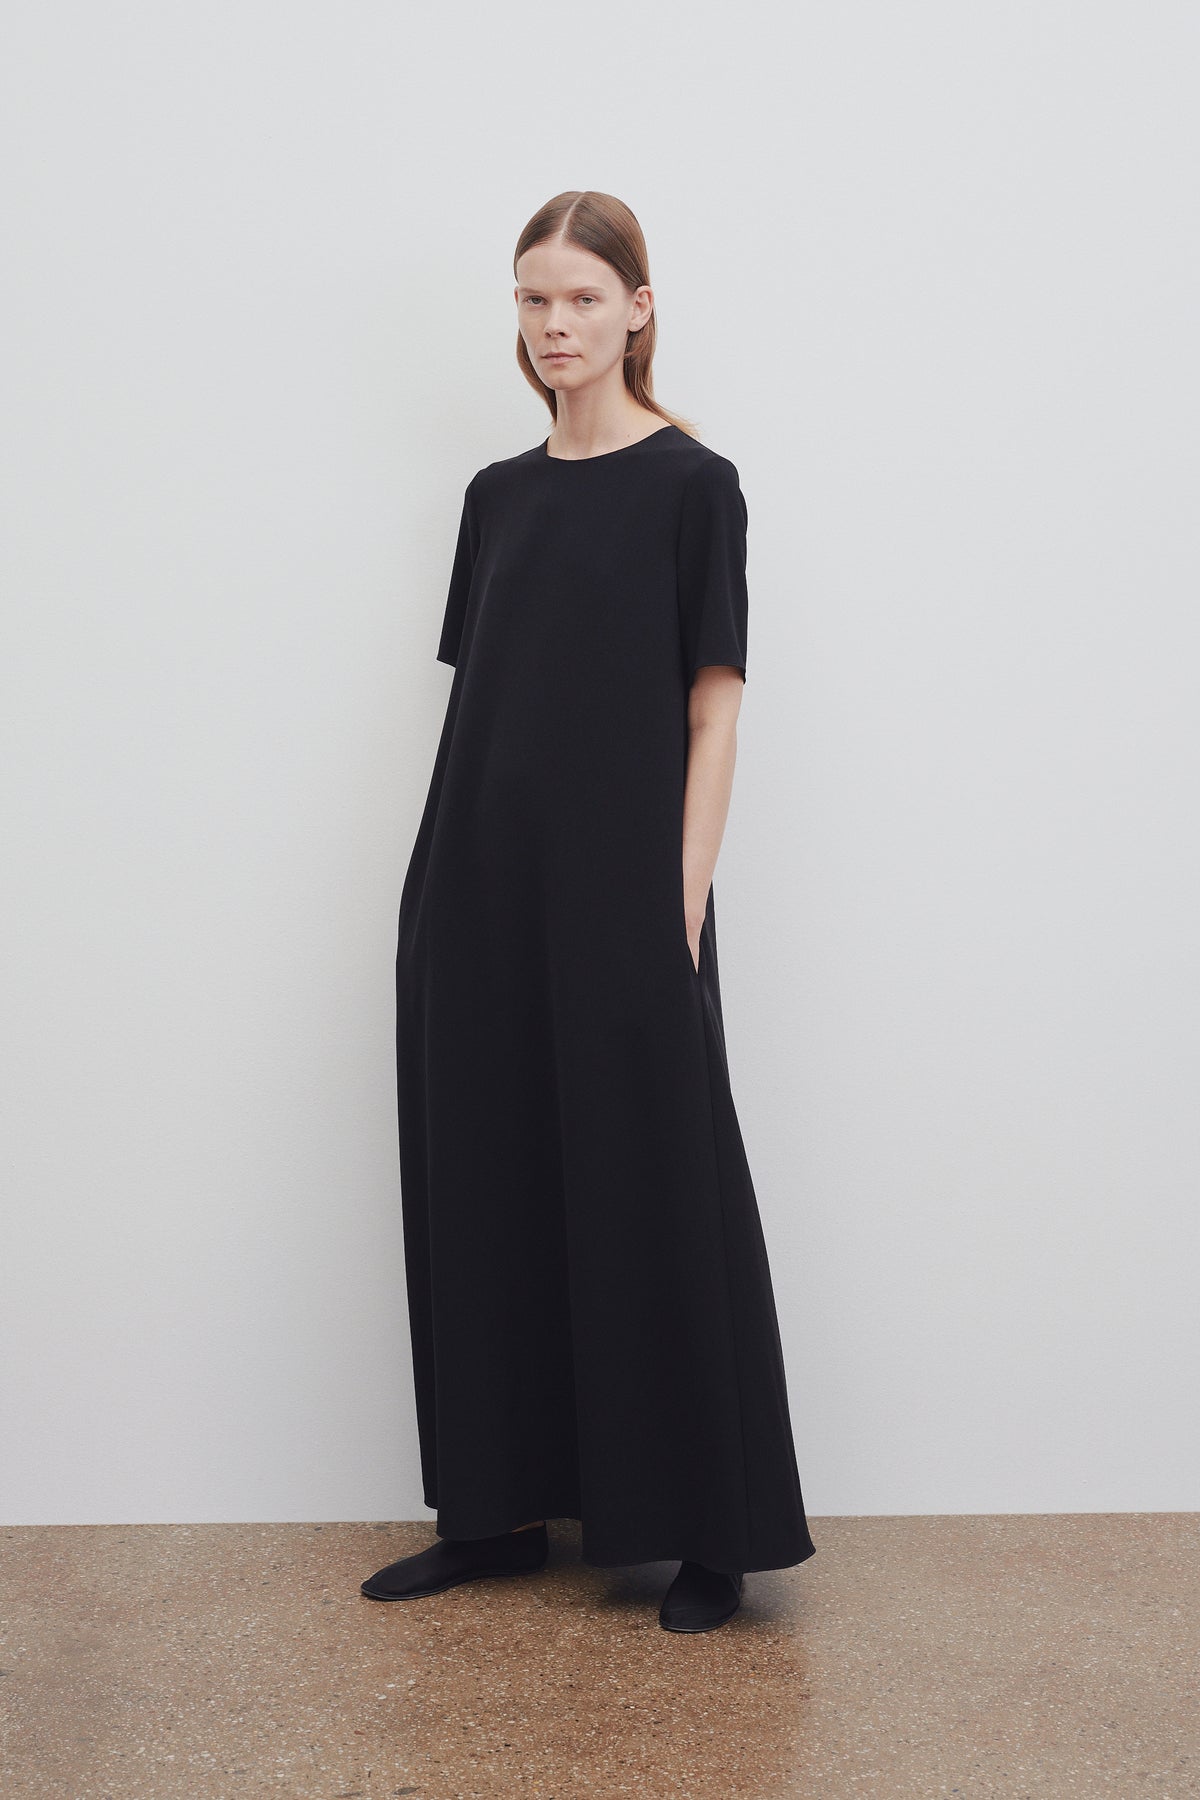 Robi Dress Black in Cady – The Row